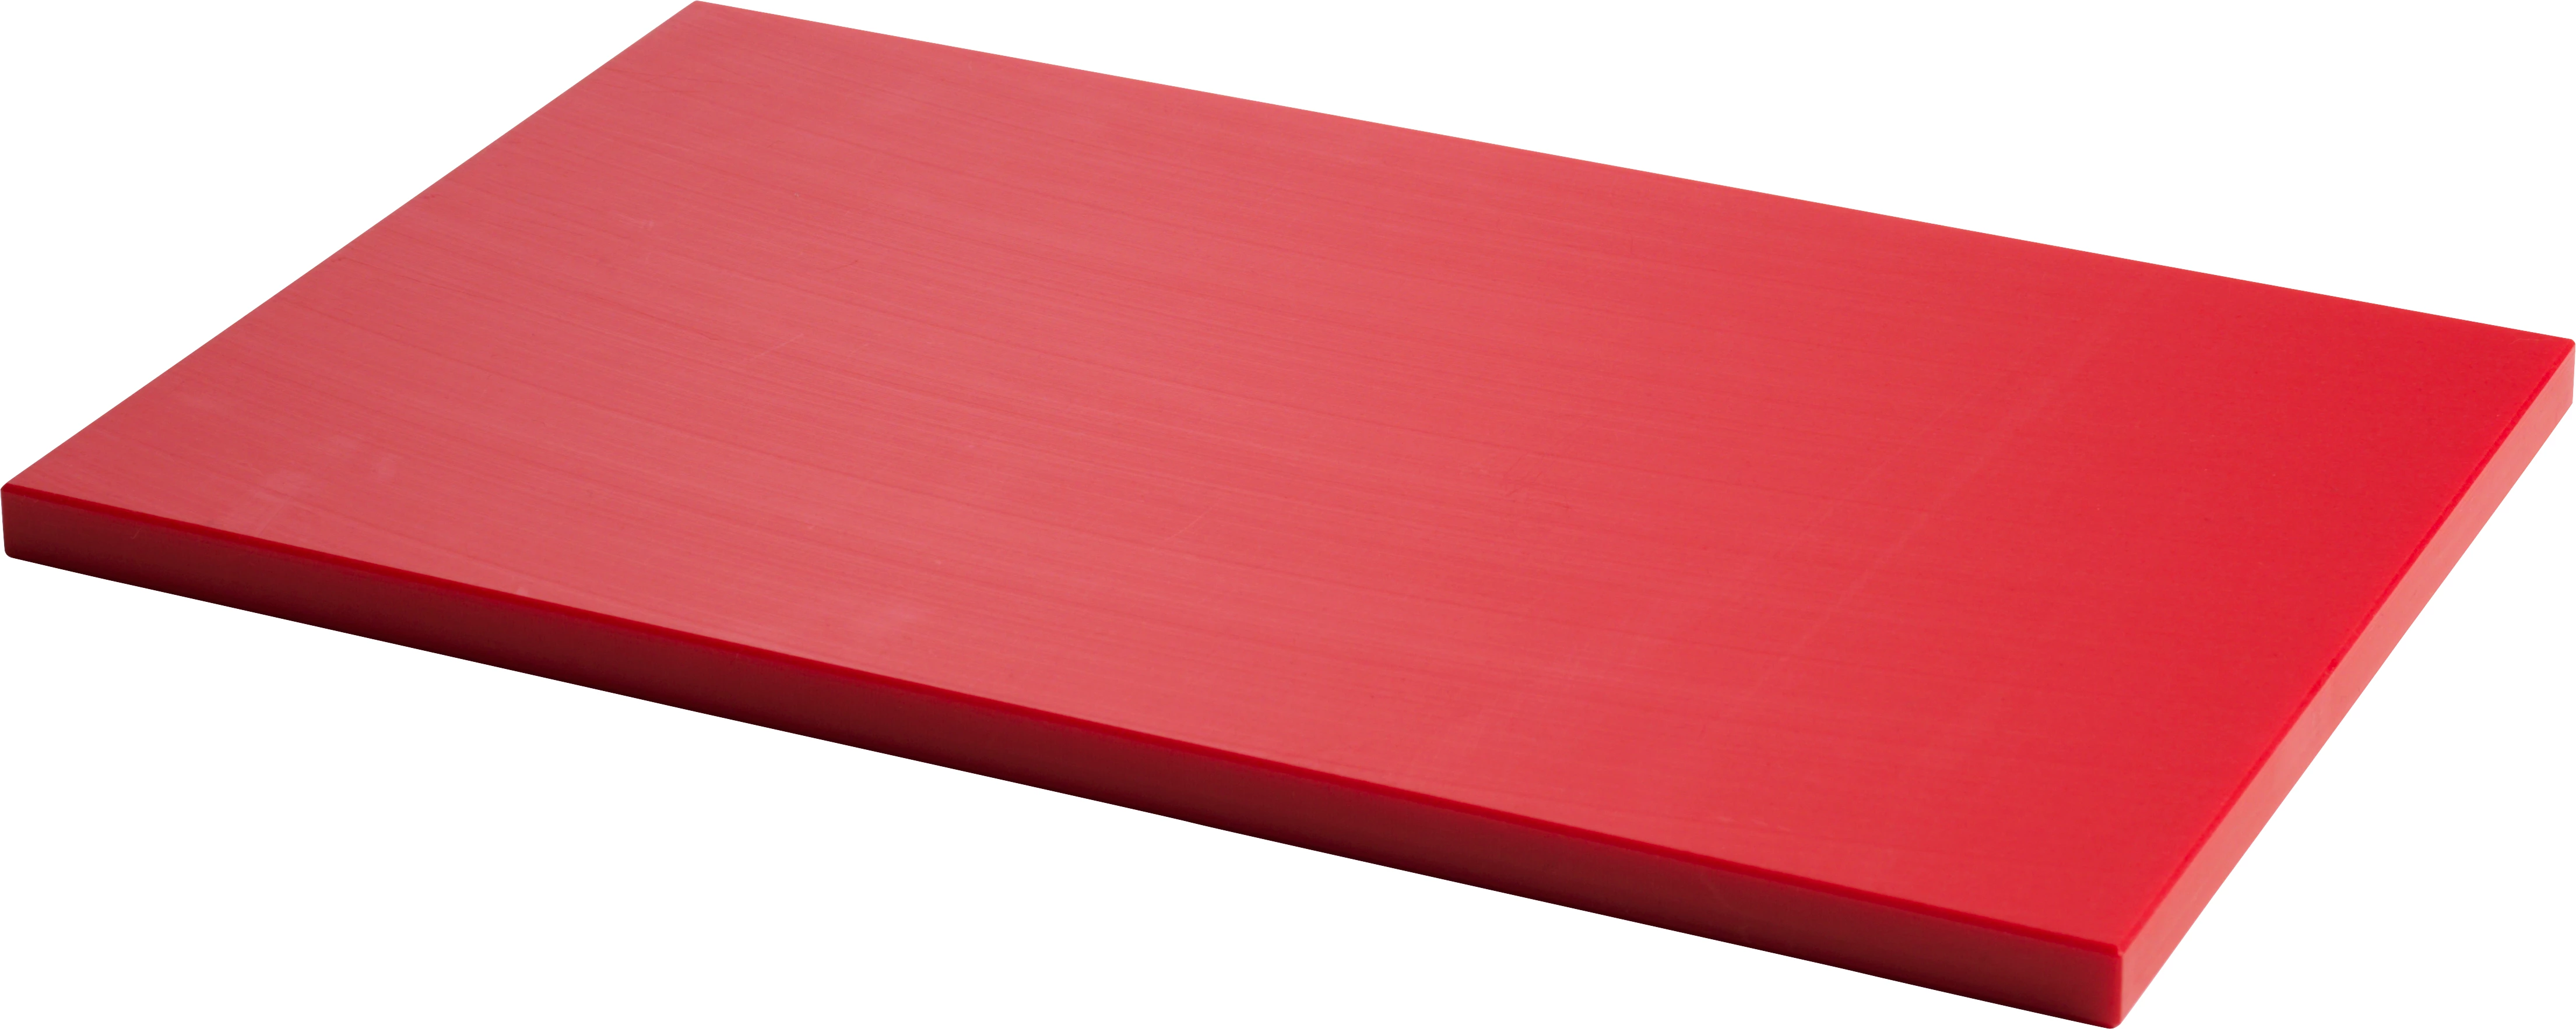 Euroboard skæreplanke, rød, 40 x 25 x 1,5 cm